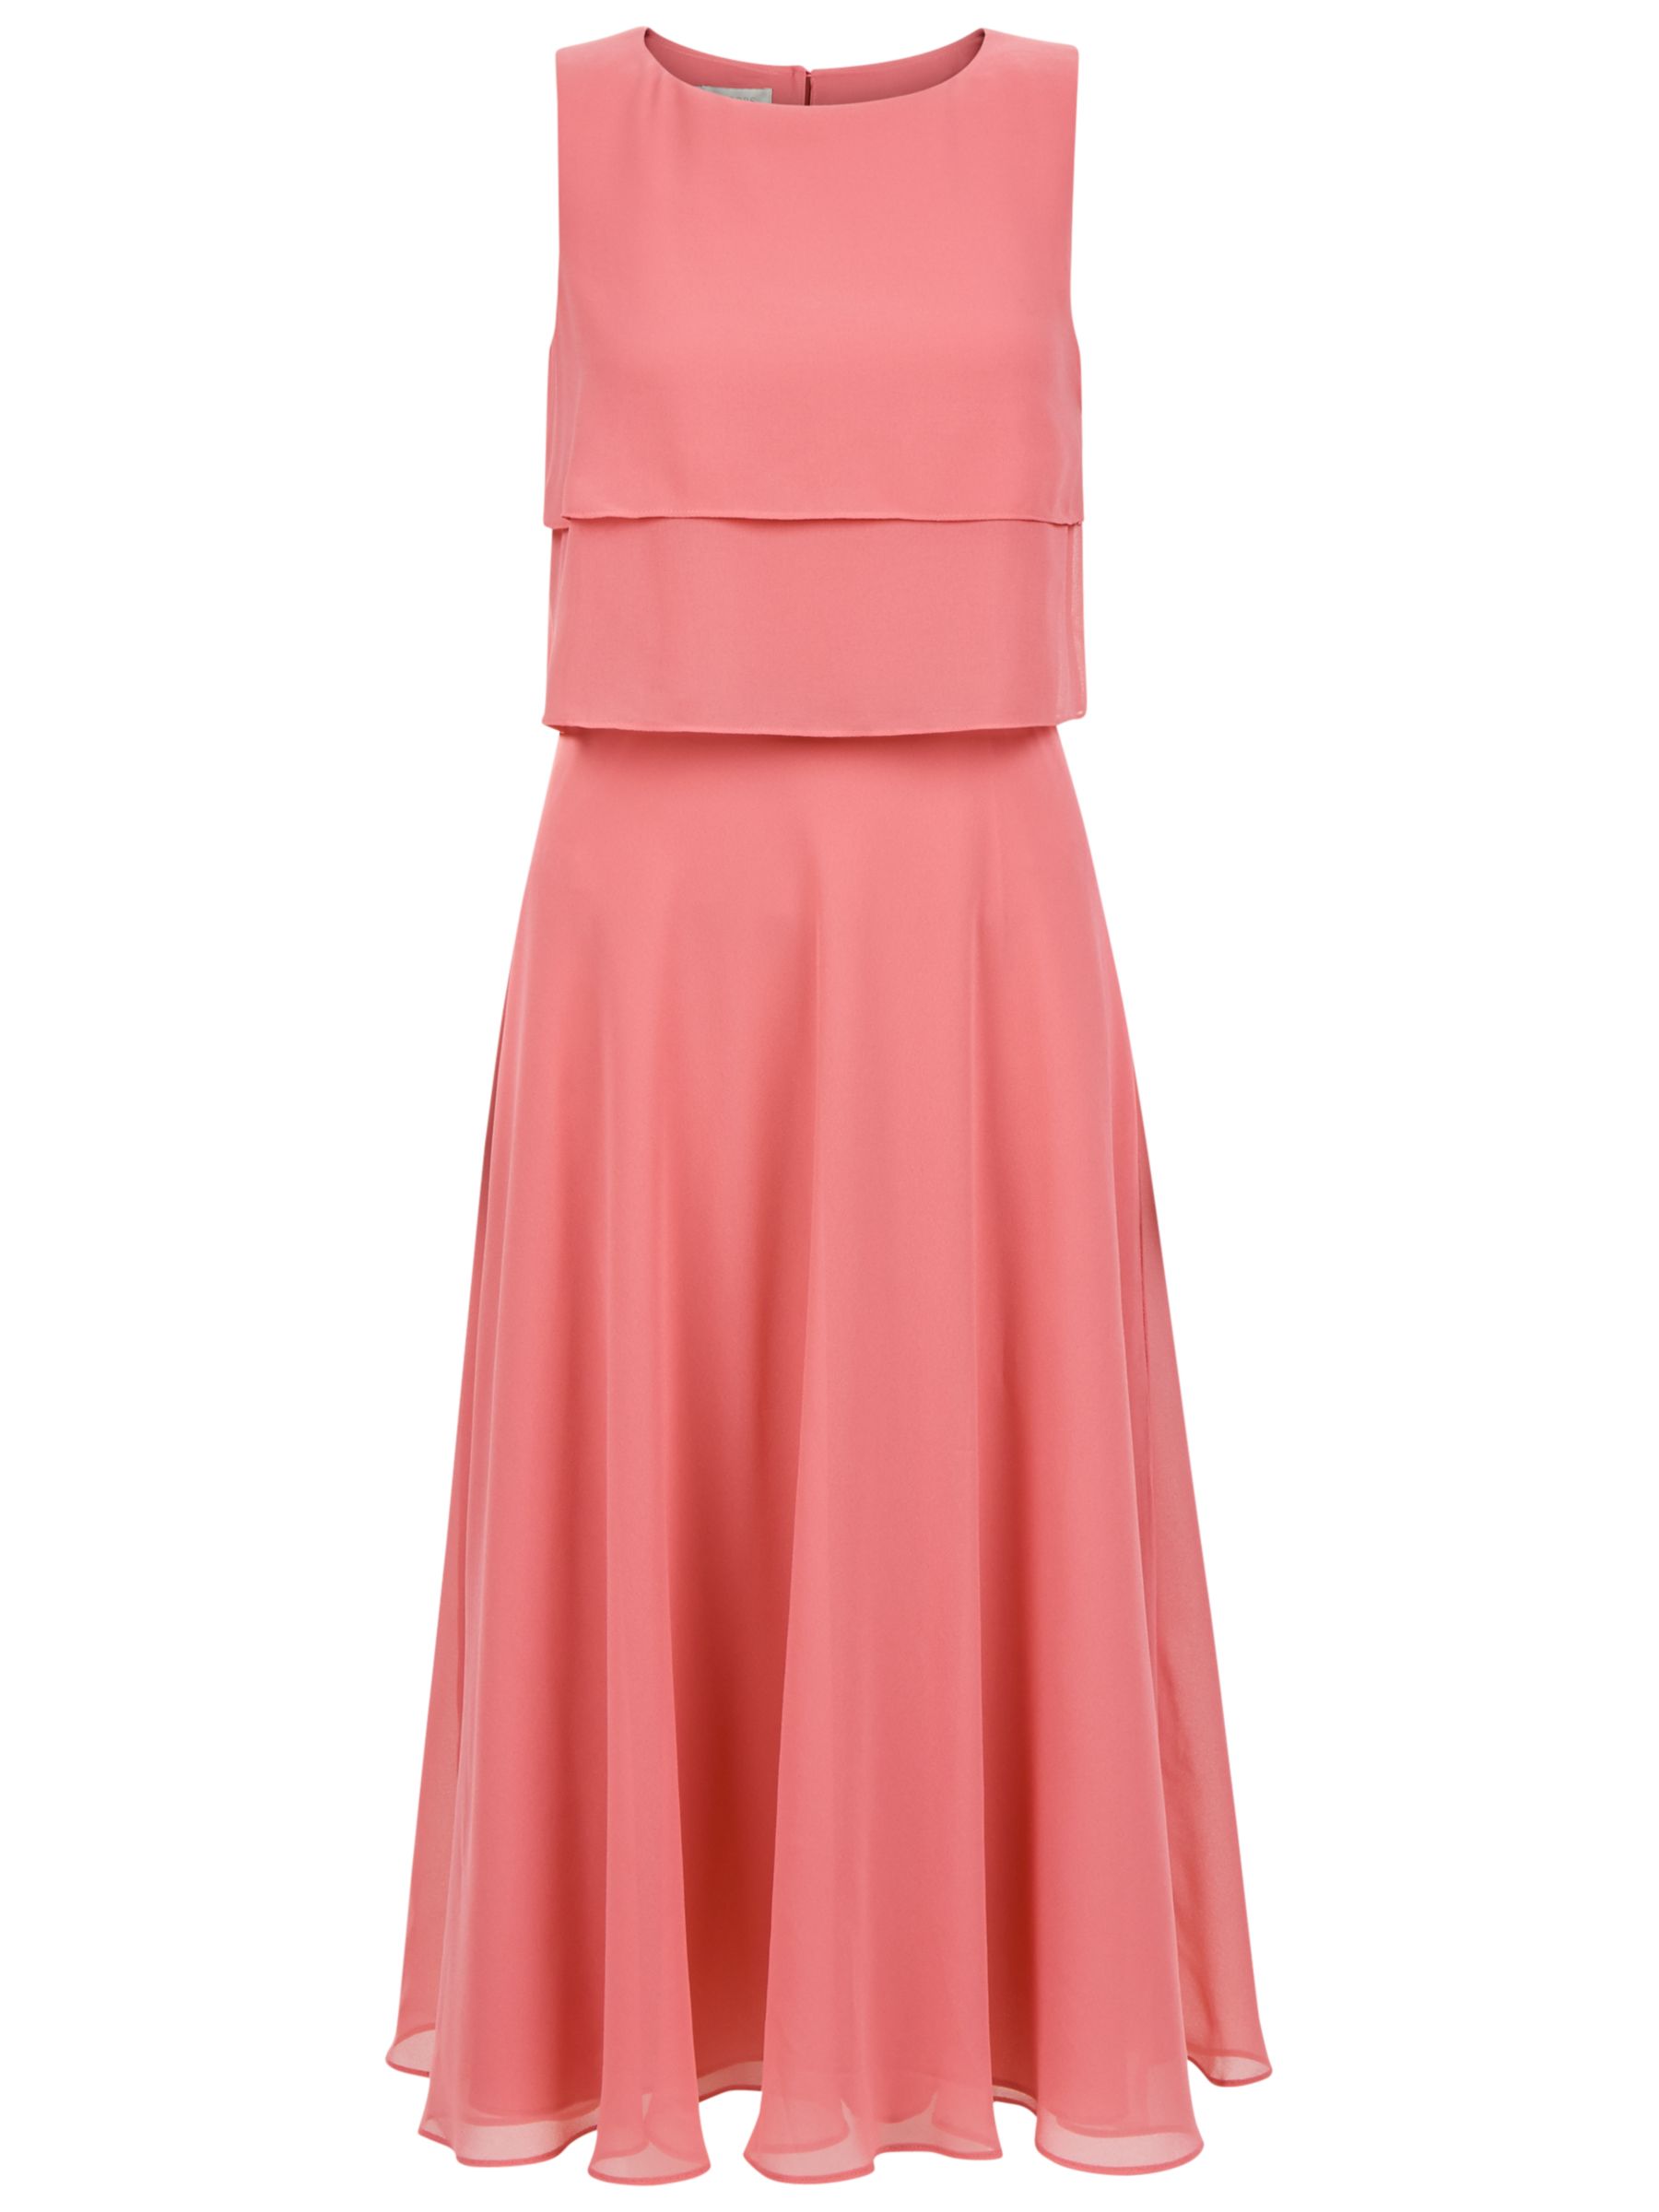 Hobbs Imogen Dress, Confetti Pink, 6